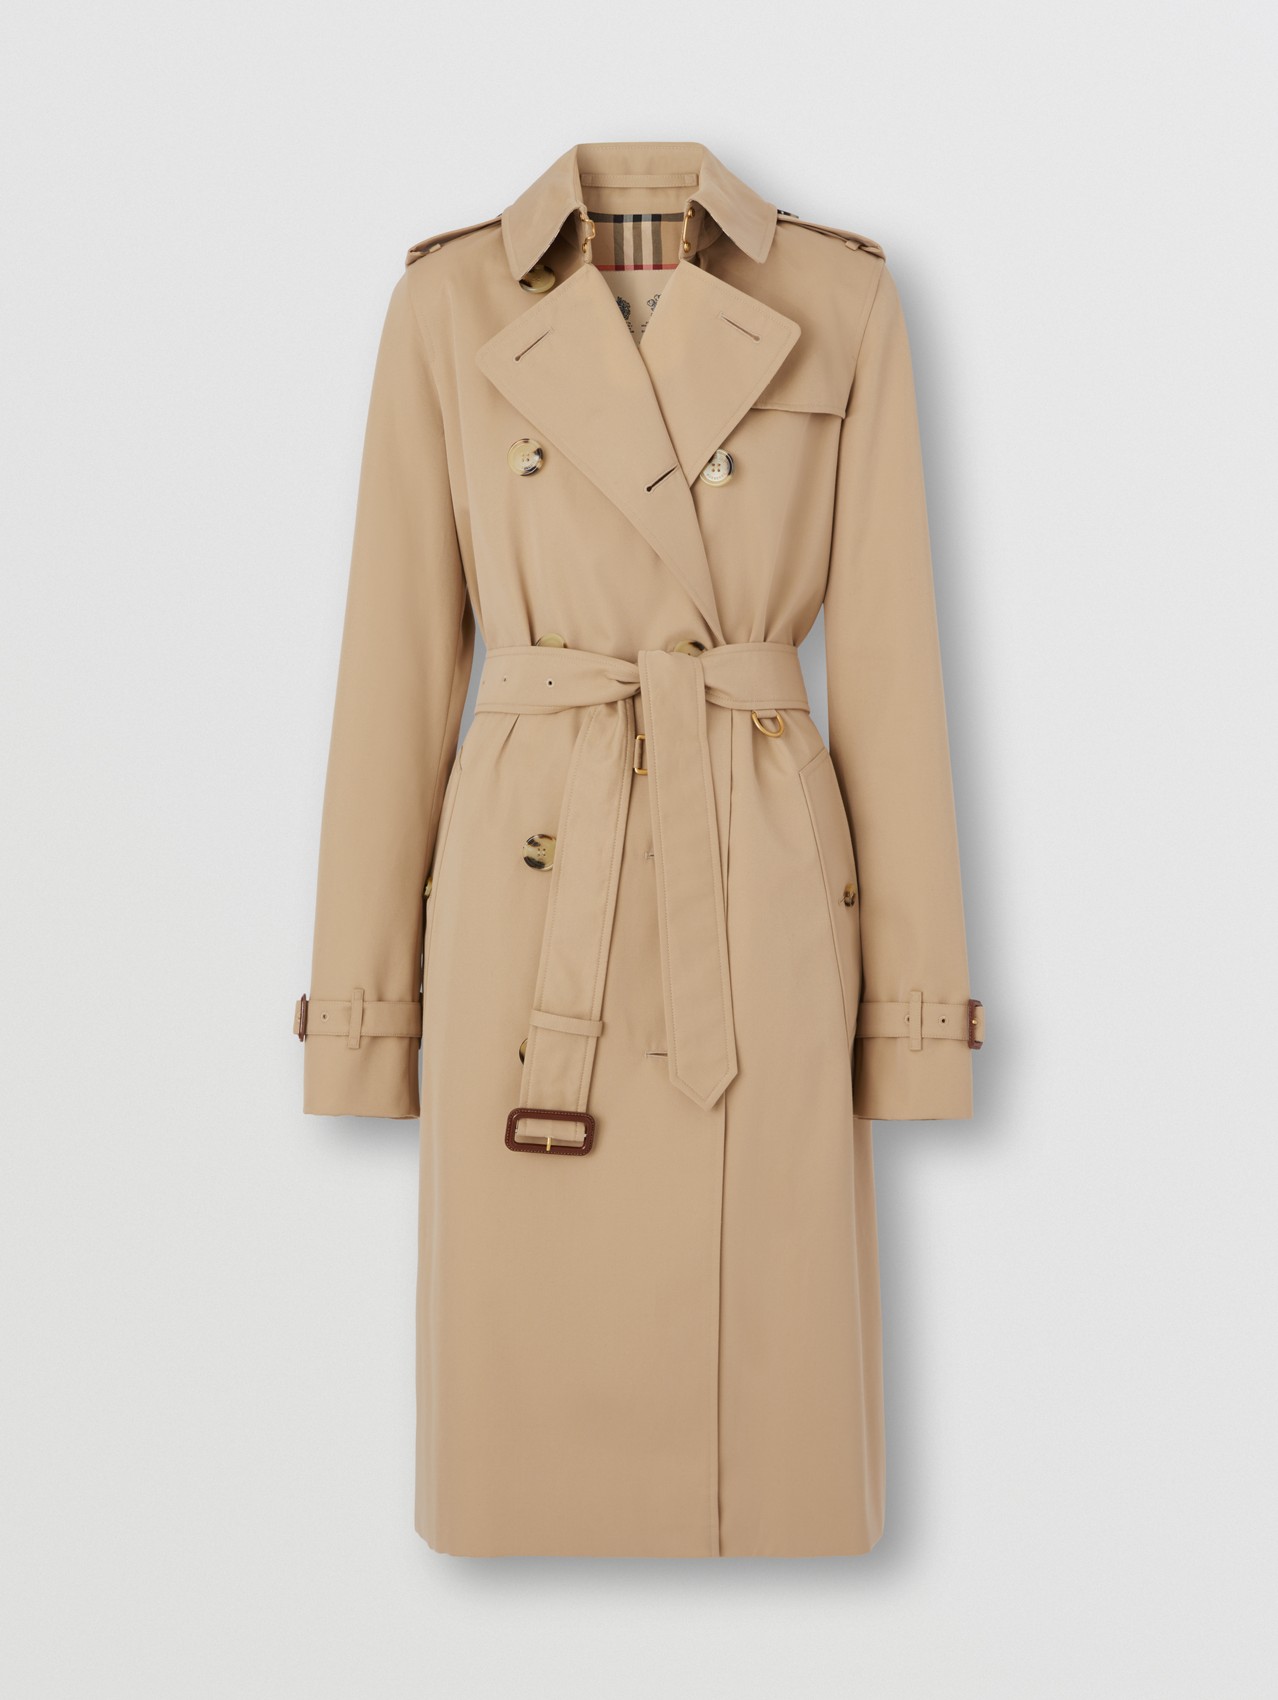 Burberry Trenchcoat Aus Canvas kensington in Natur Damen Bekleidung Mäntel Regenjacken und Trenchcoats Sparen Sie 10% 